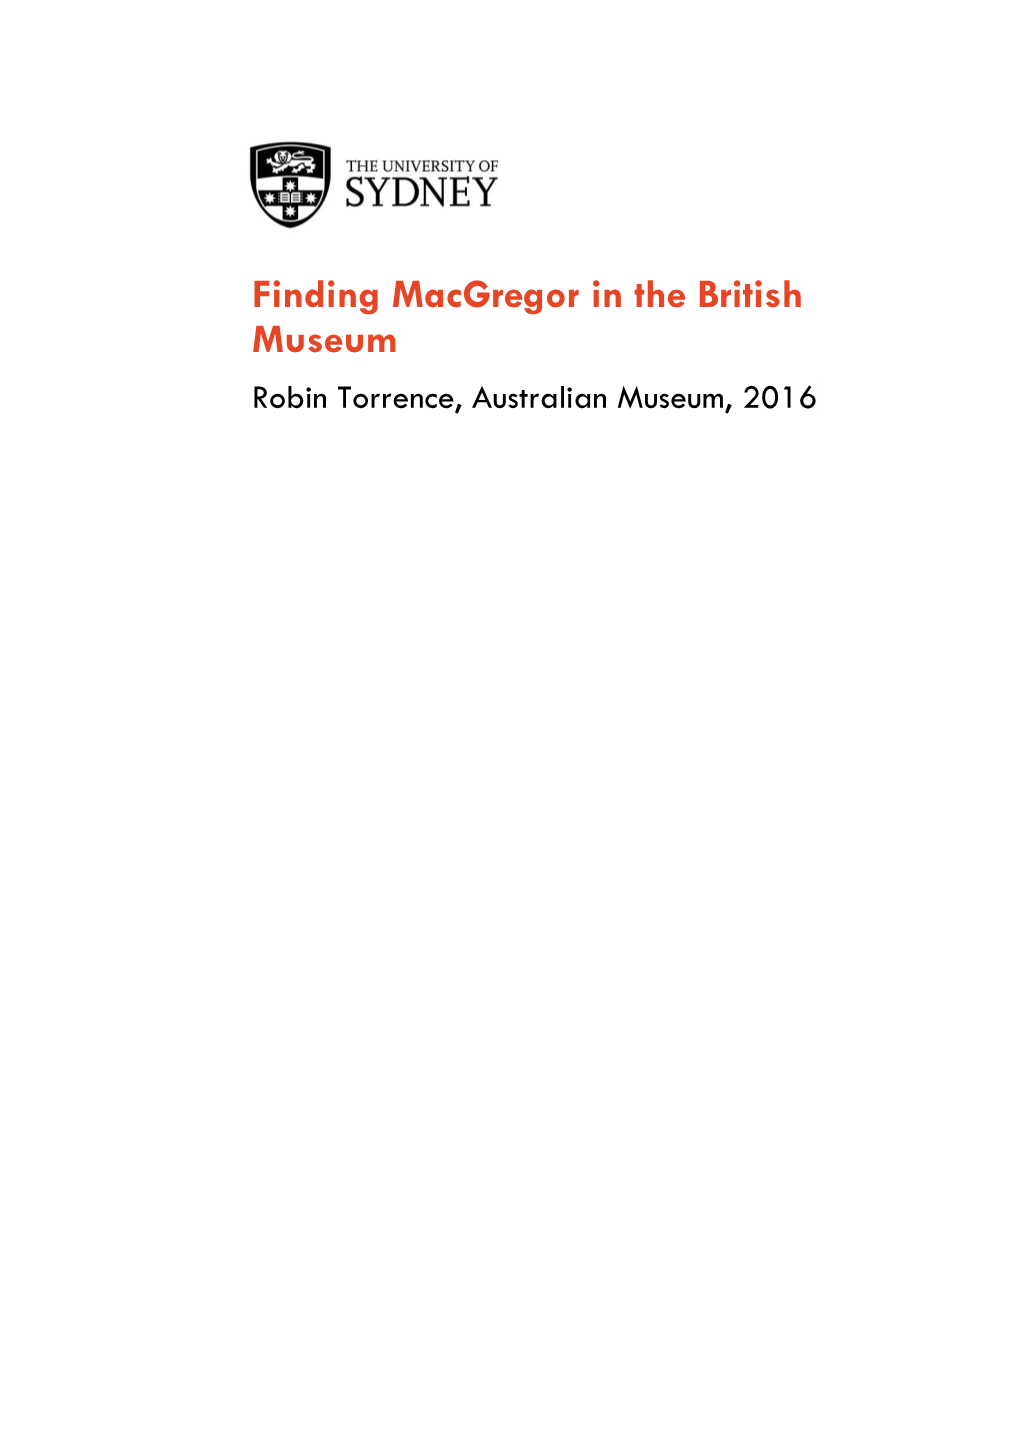 Finding Macgregor in the British Museum Robin Torrence, Australian Museum, 2016